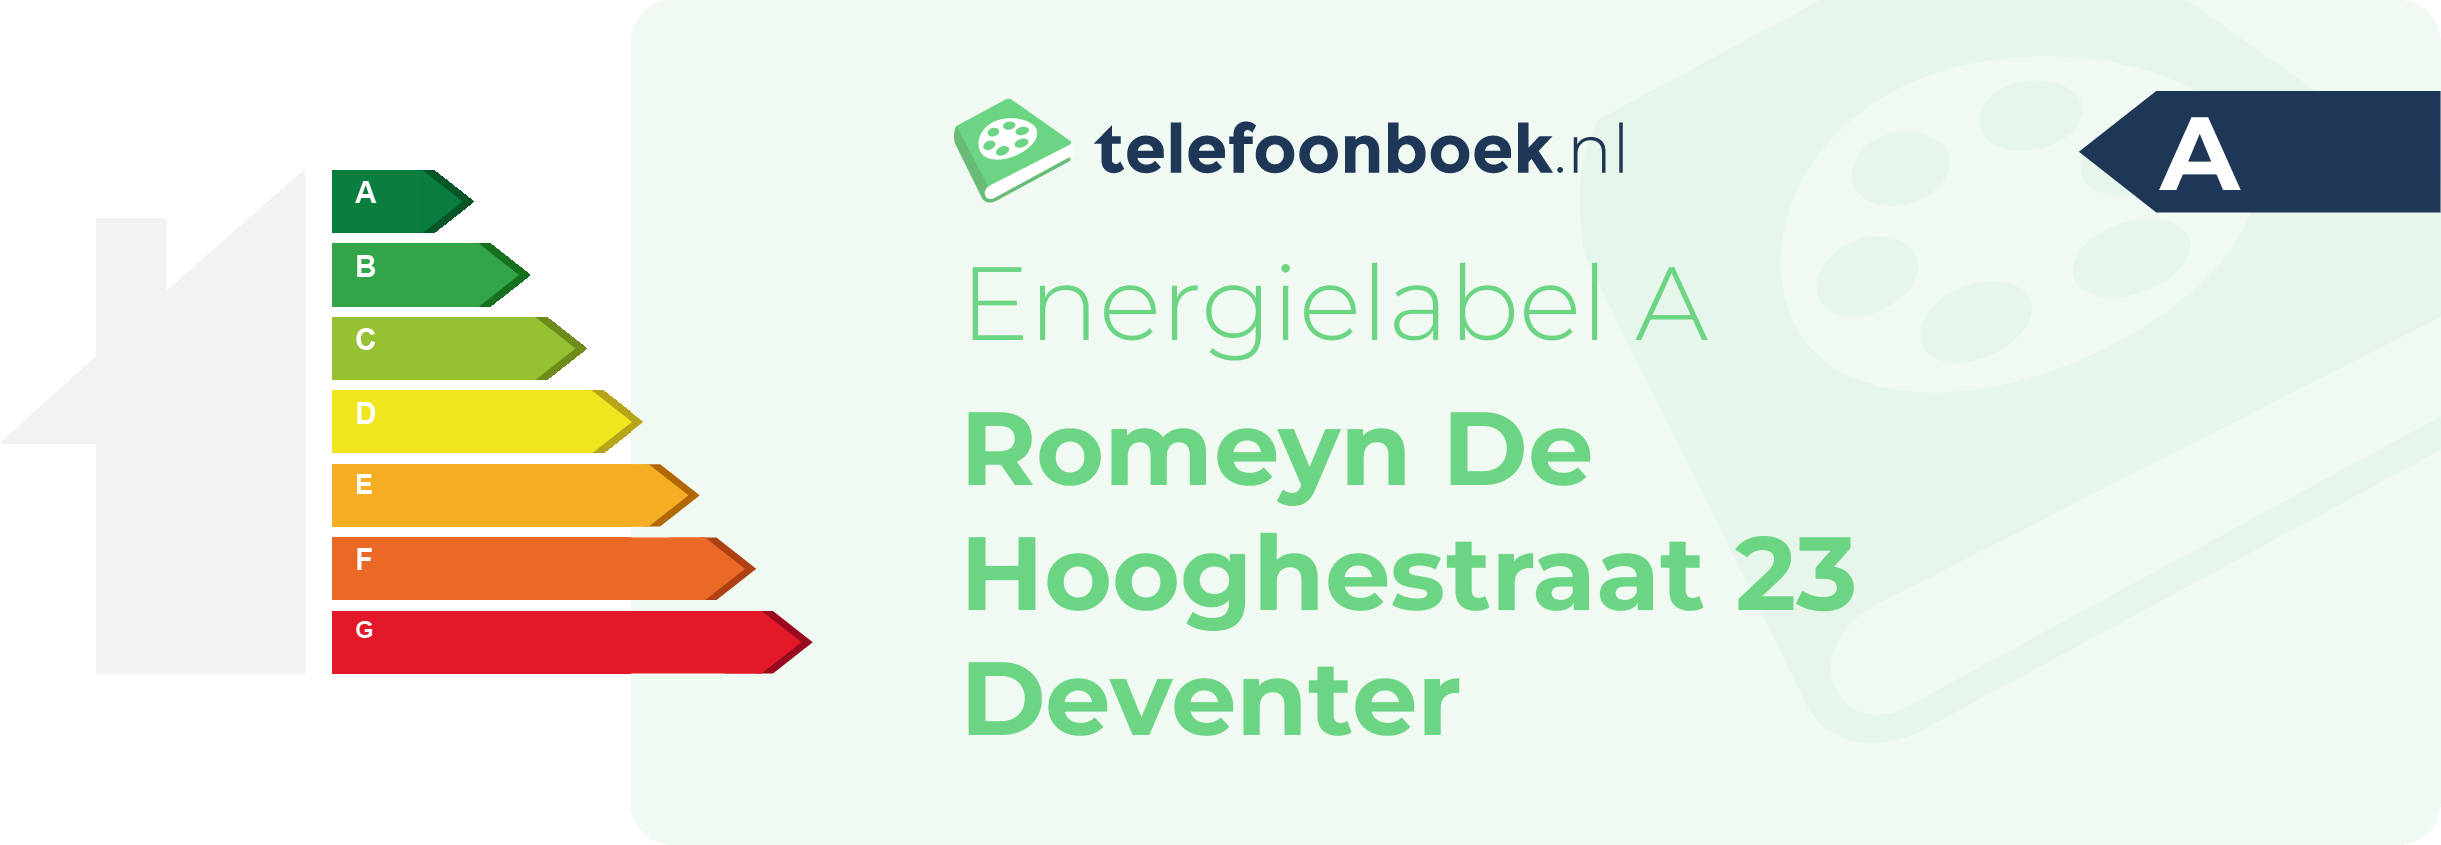 Energielabel Romeyn De Hooghestraat 23 Deventer